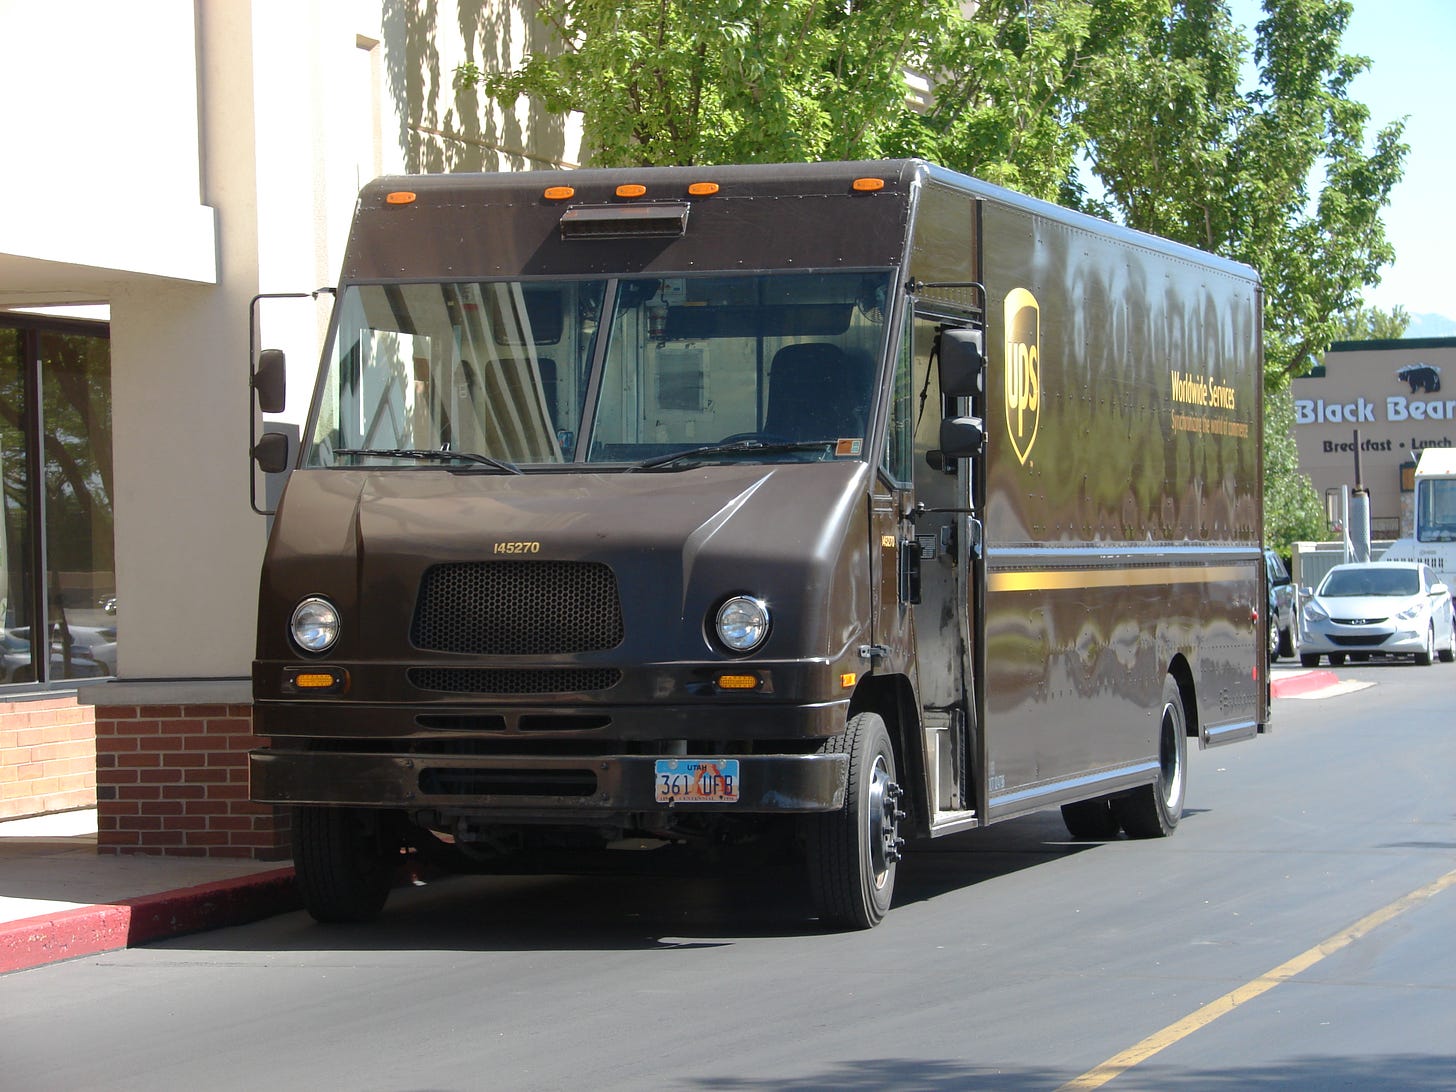 A UPS truck on a sunny street